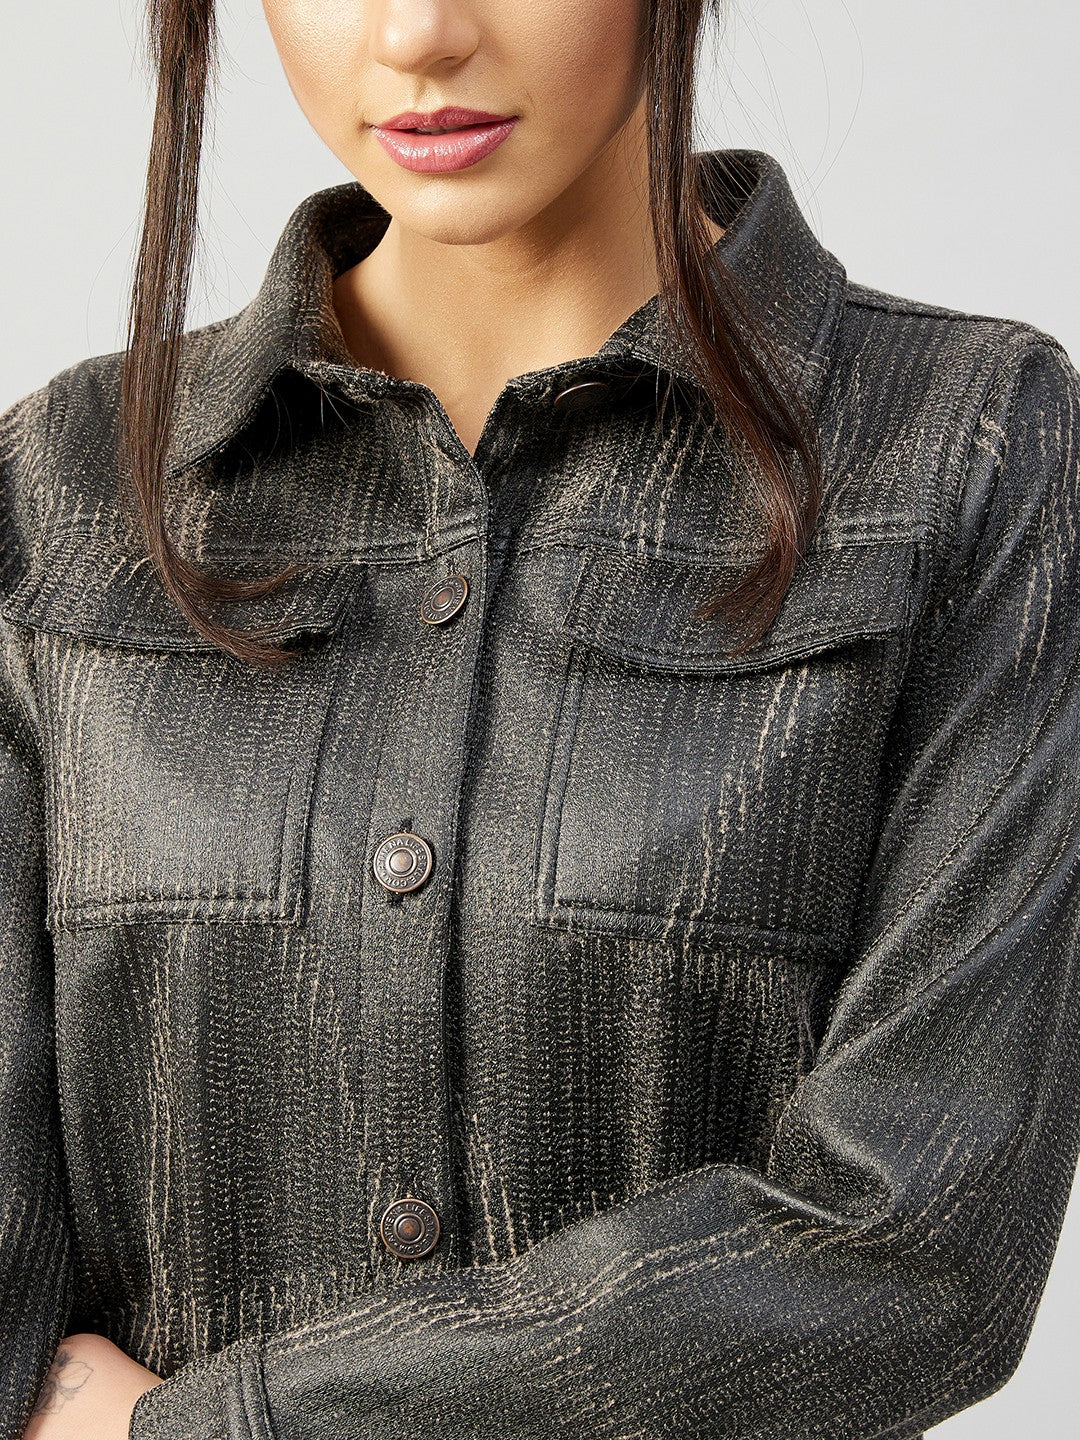 Athena Charcoal Grey Leather Shirt Mini Dress - Athena Lifestyle